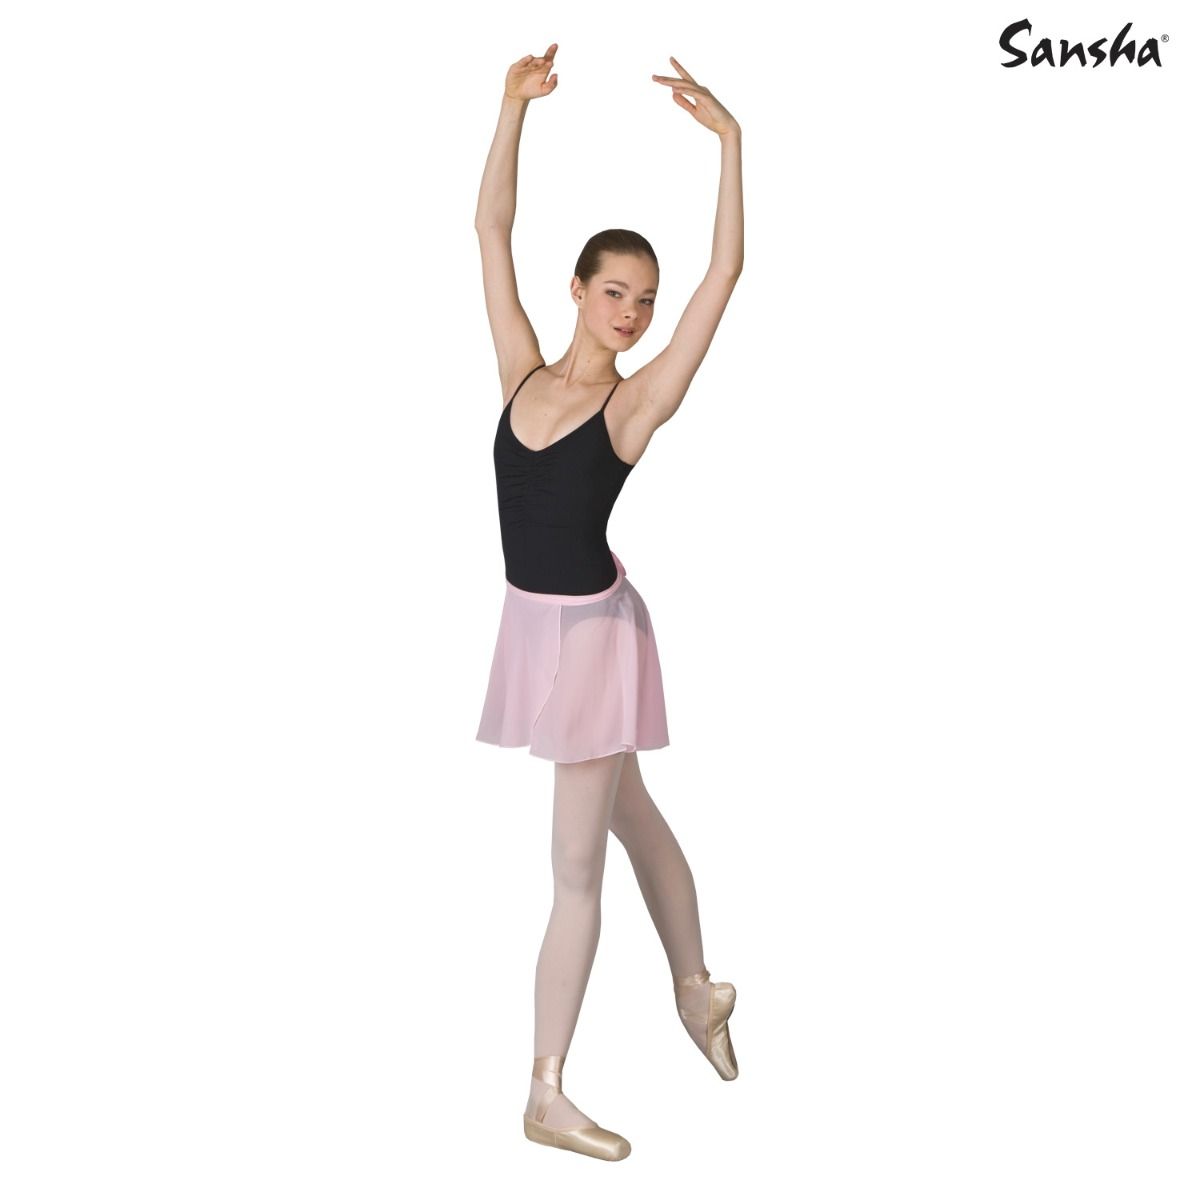 Sansha, vaaleanpunainen balettihame, Zephyr